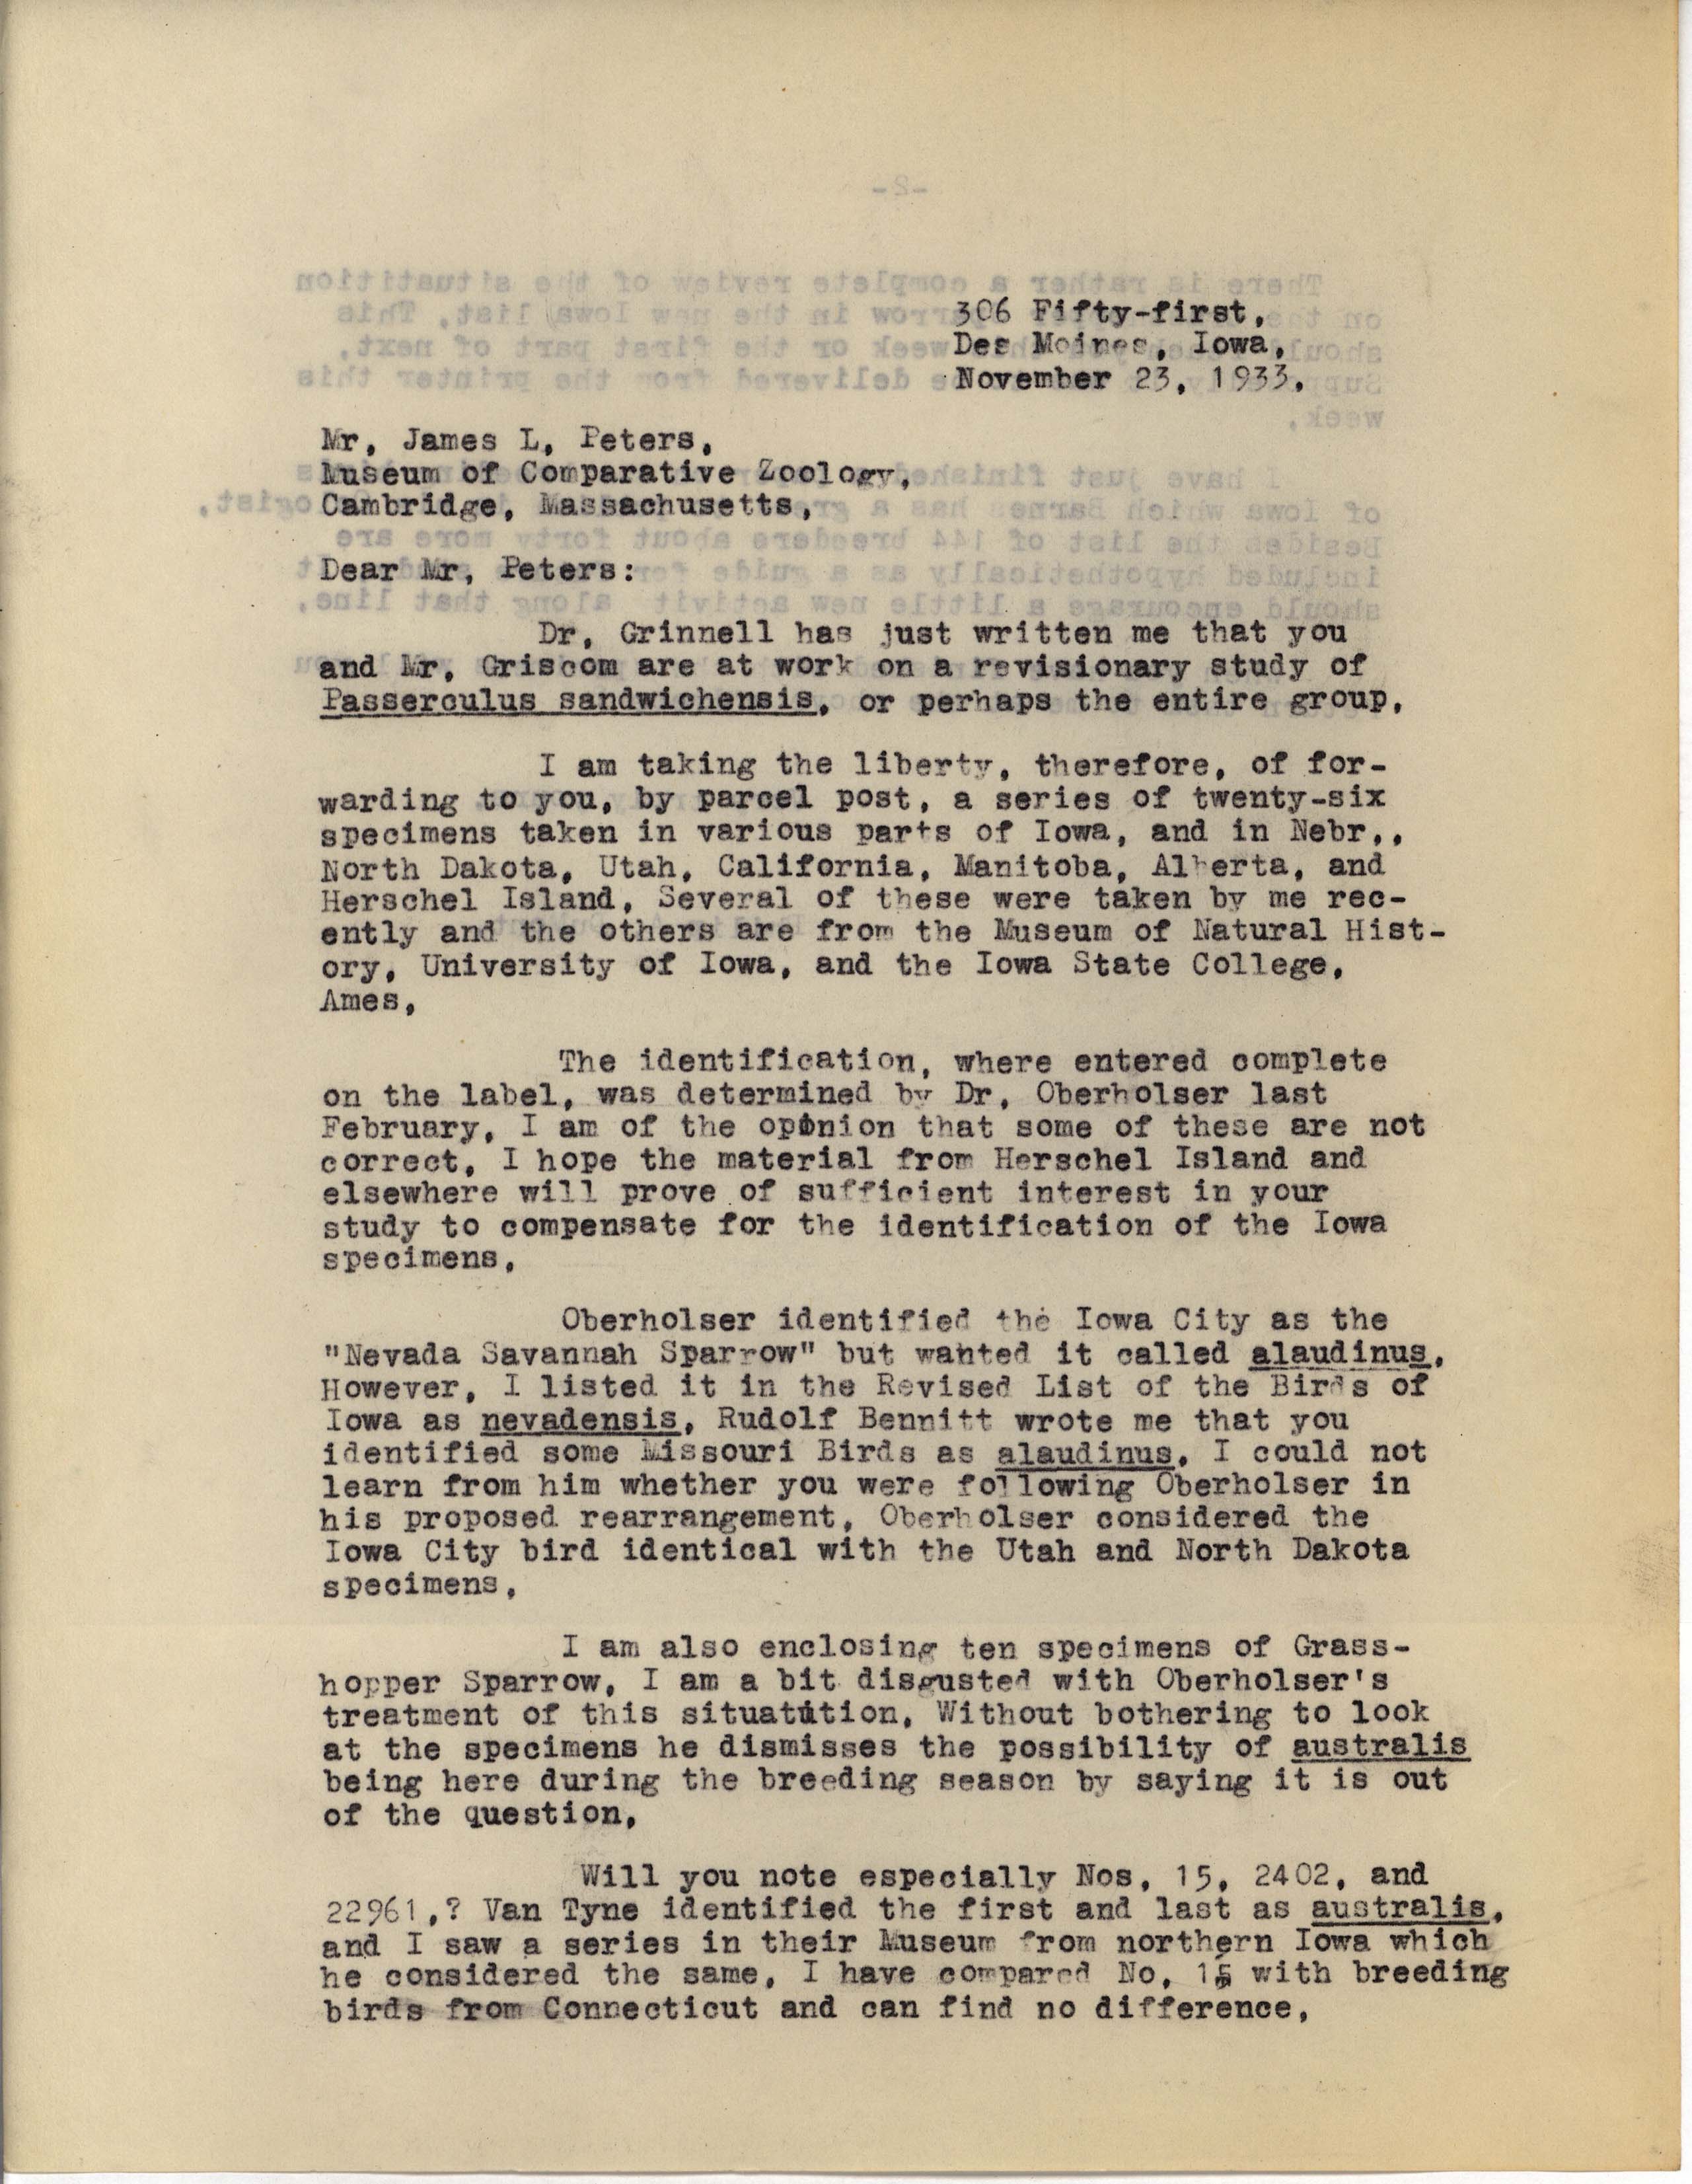 Philip DuMont letter to James Peters regarding Sparrow identification, November 23, 1933